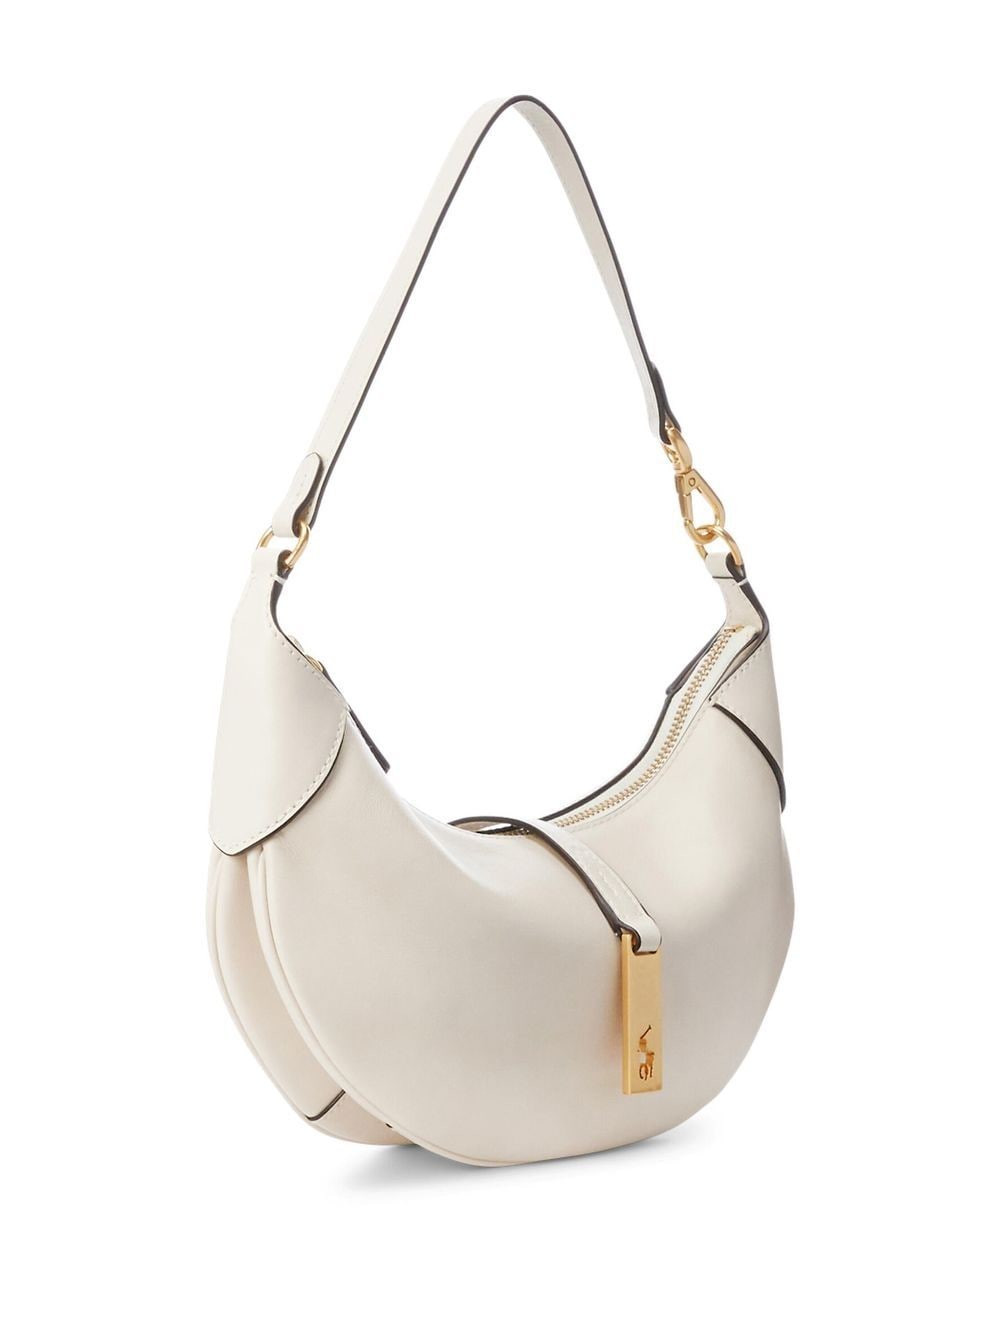 BRAND NEW Ralph Lauren cream white purse tote bag